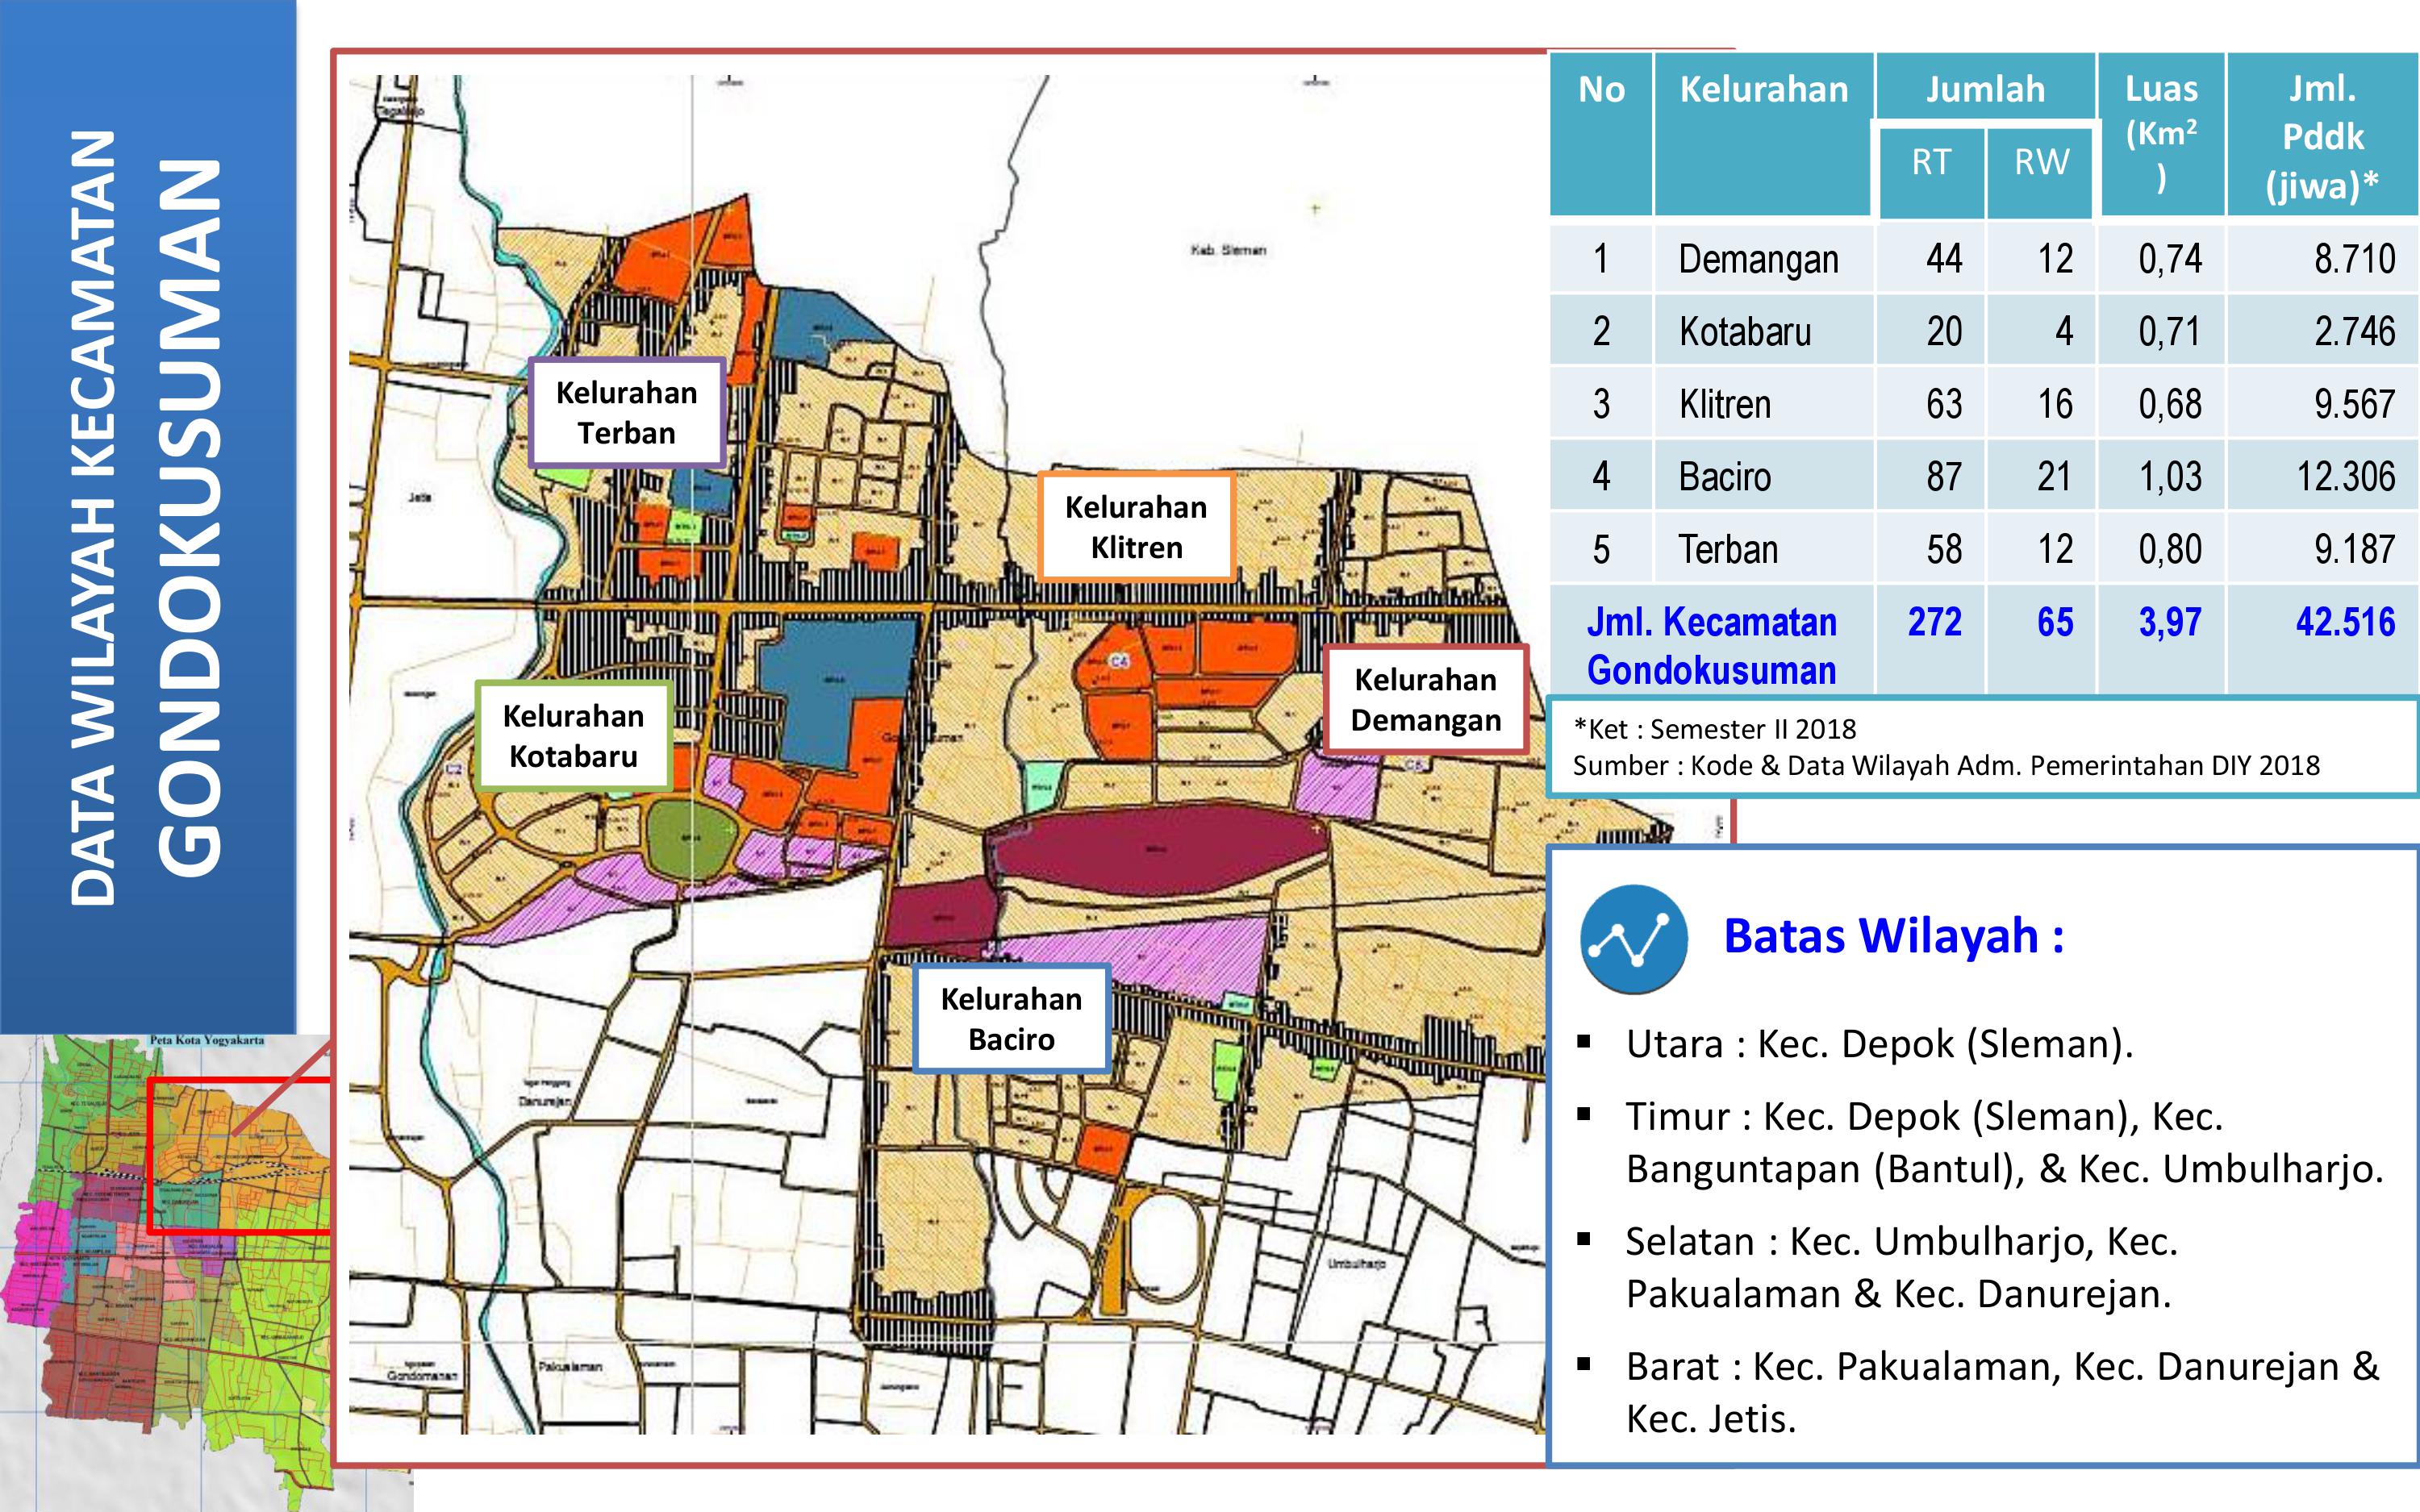 Data Jumlah Tempat Wisata Di Provinsi Yogyakarta